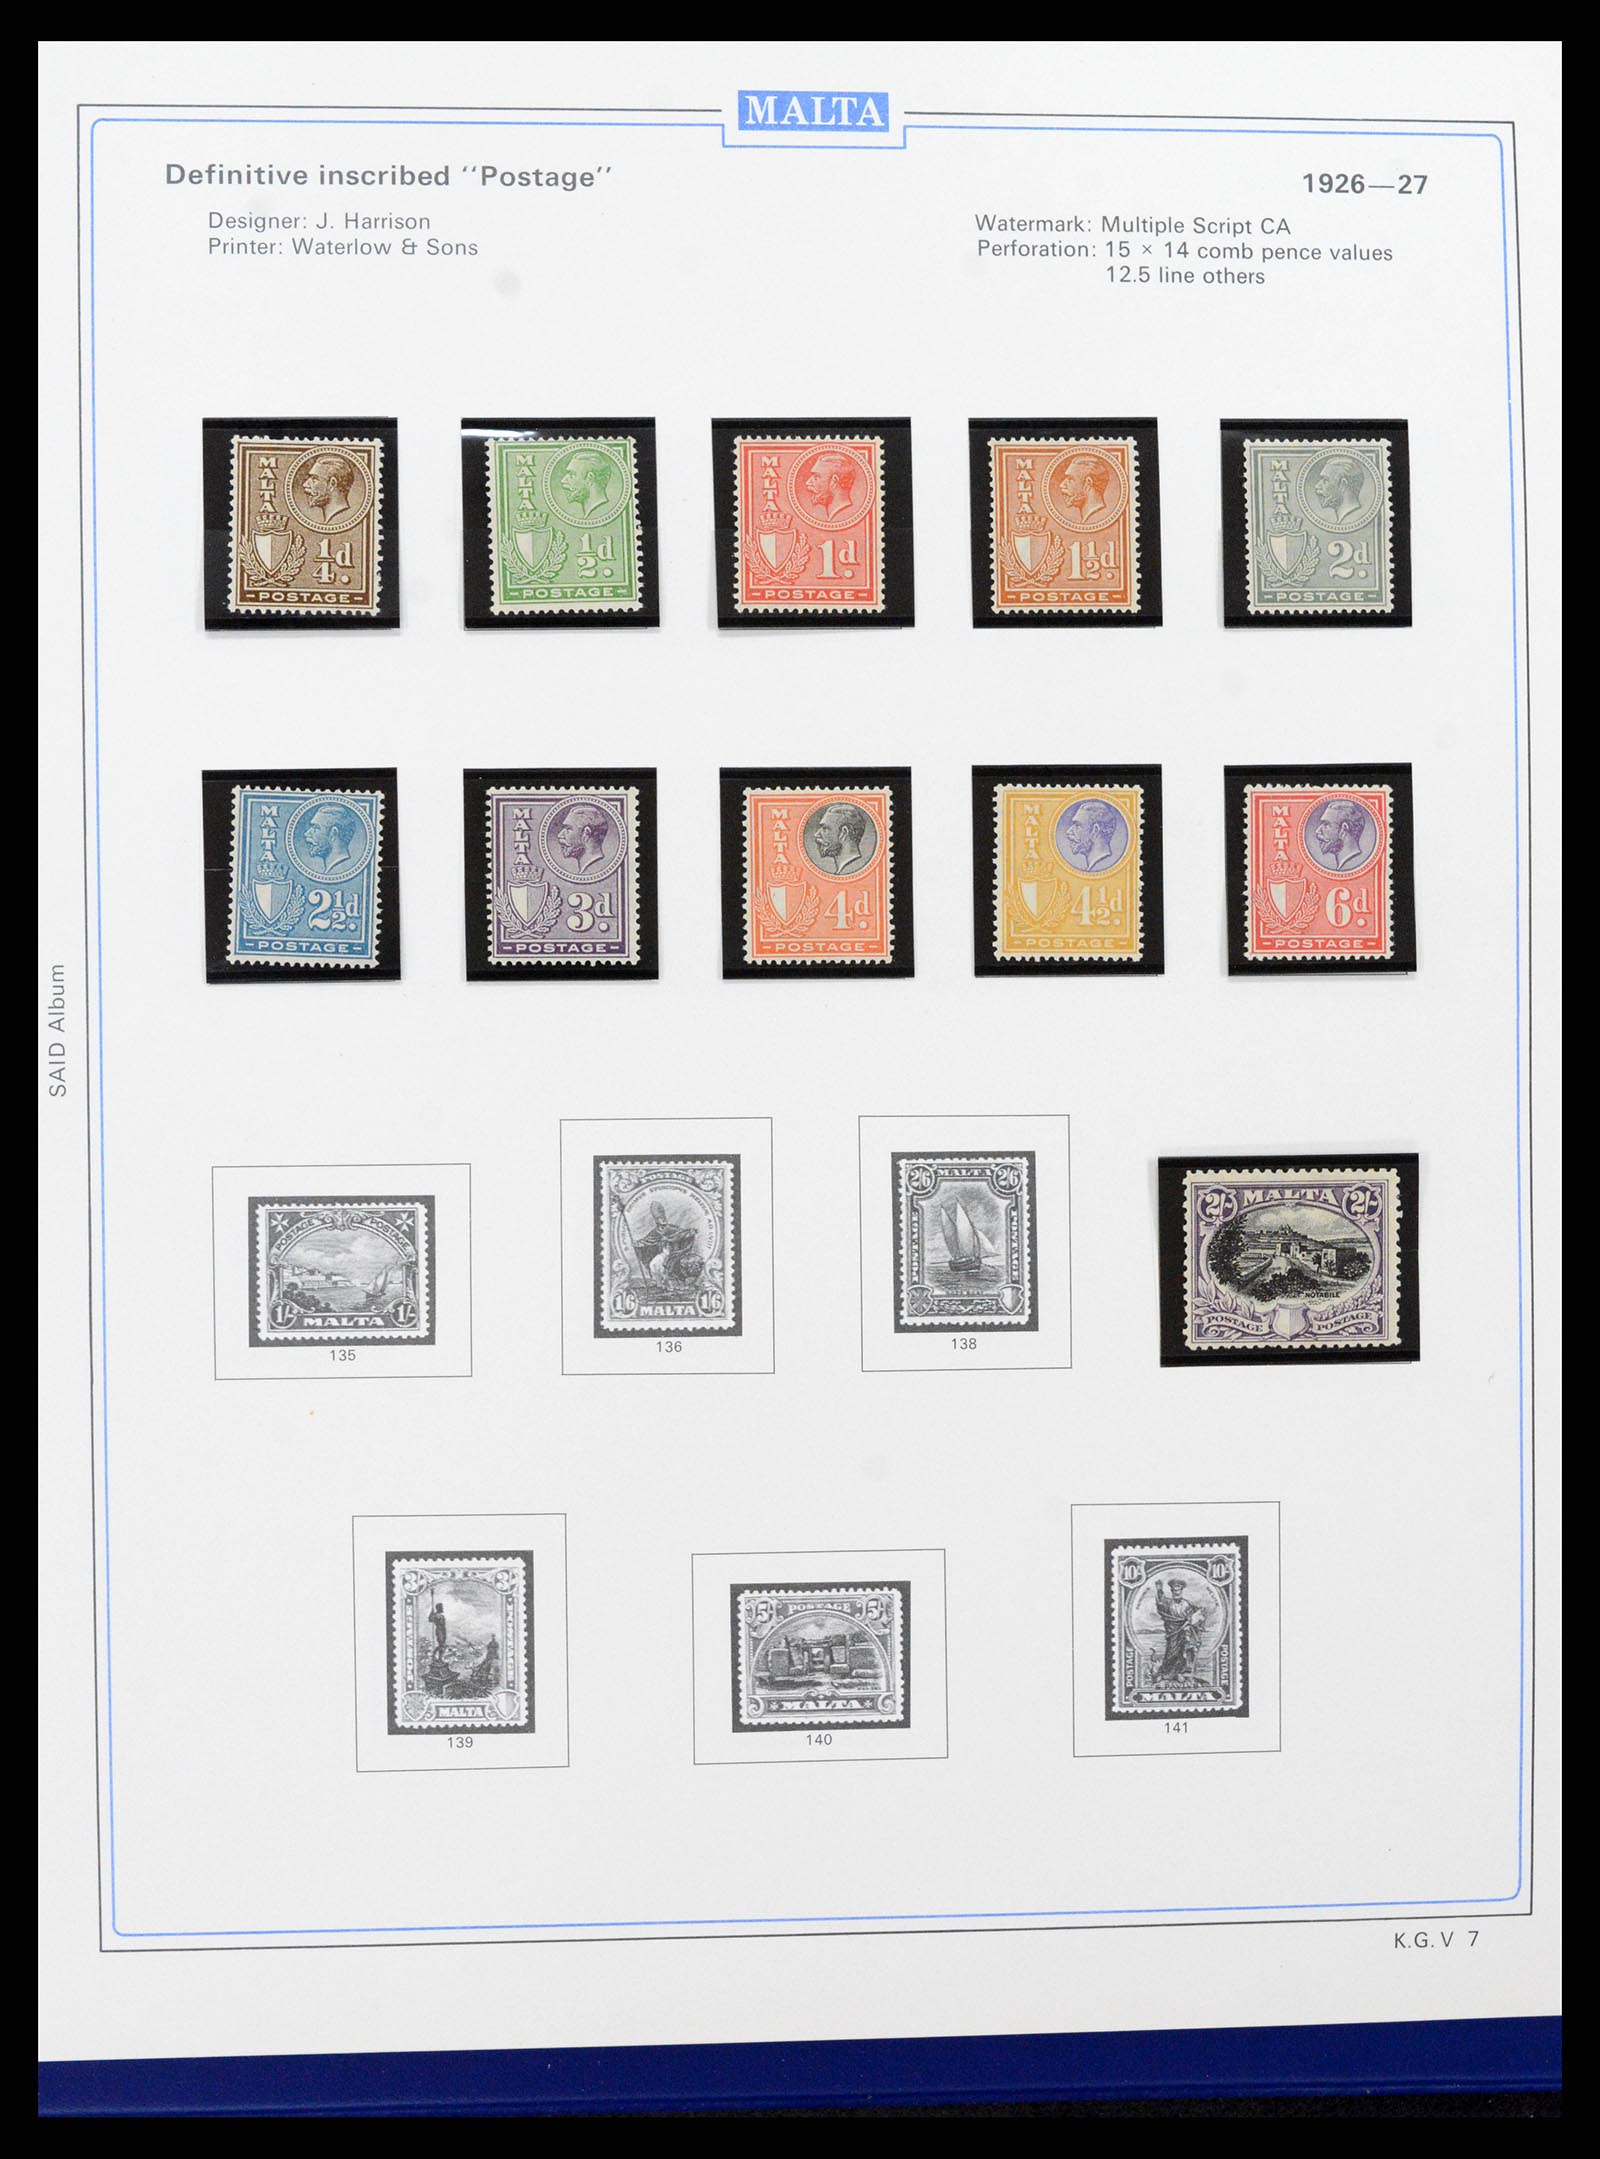 37374 011 - Stamp collection 37374 Malta 1885-2012.